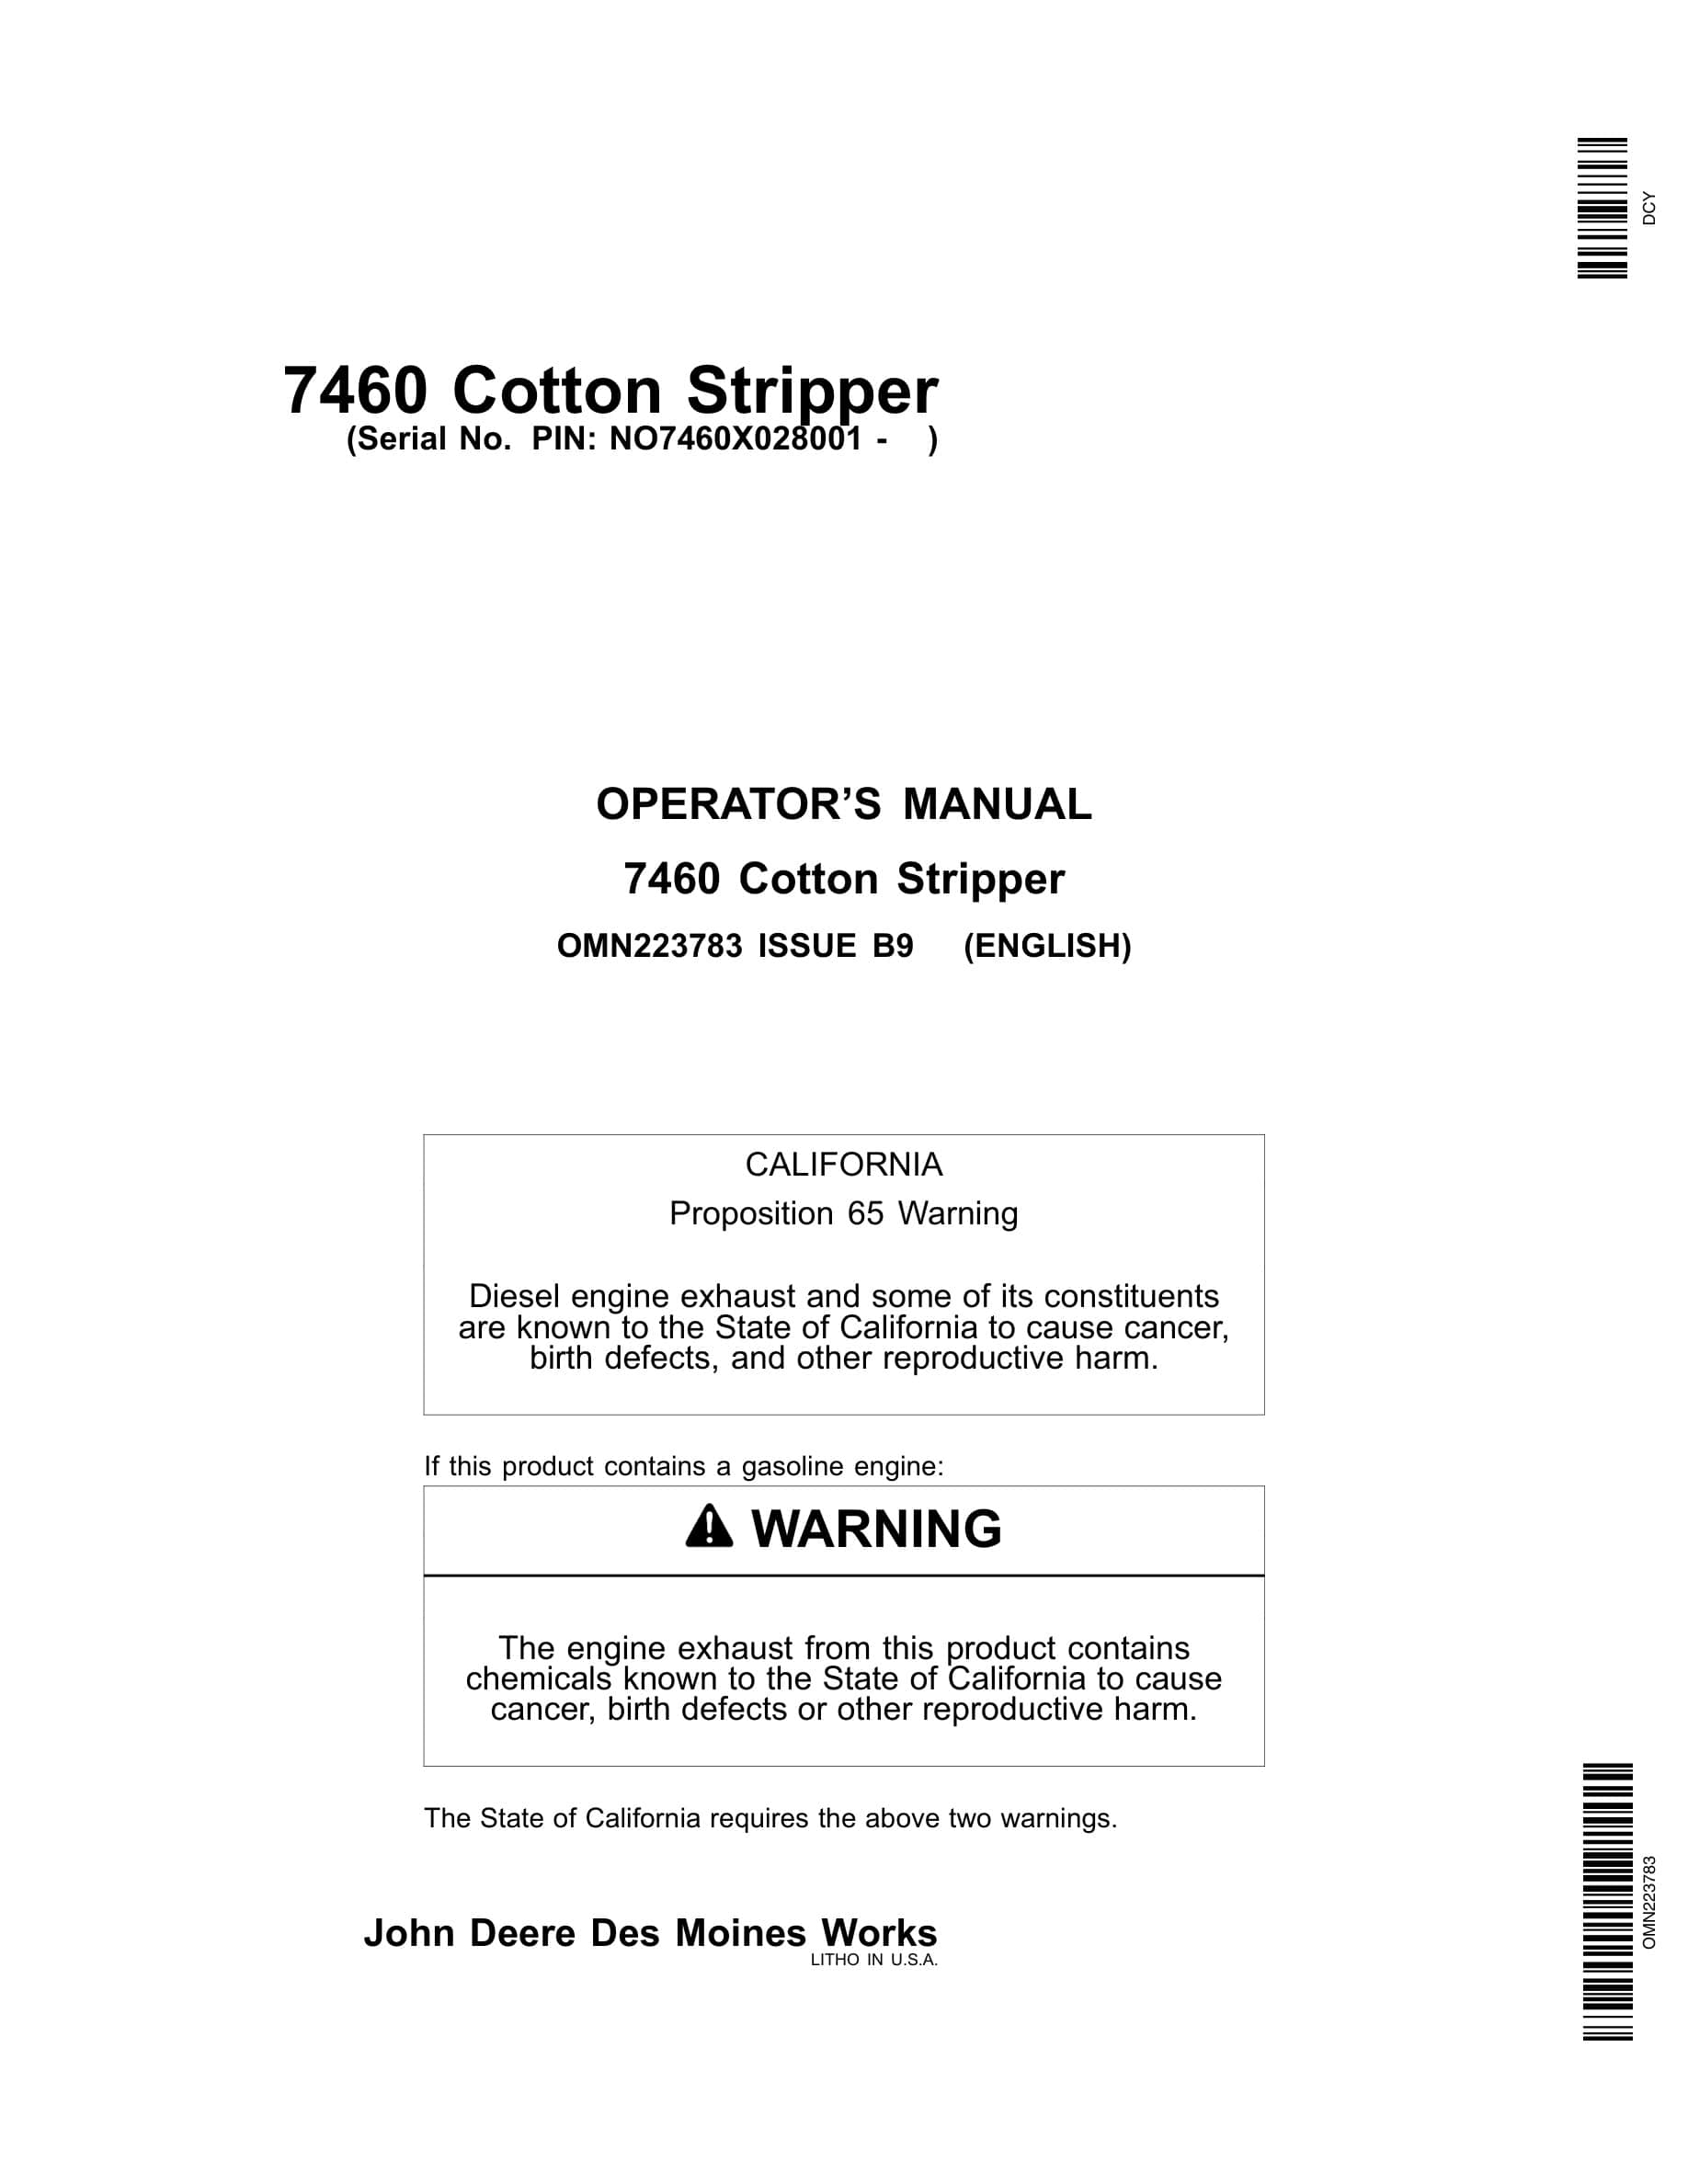 John Deere 7460 Cotton Stripper Operator Manual OMN223783-1